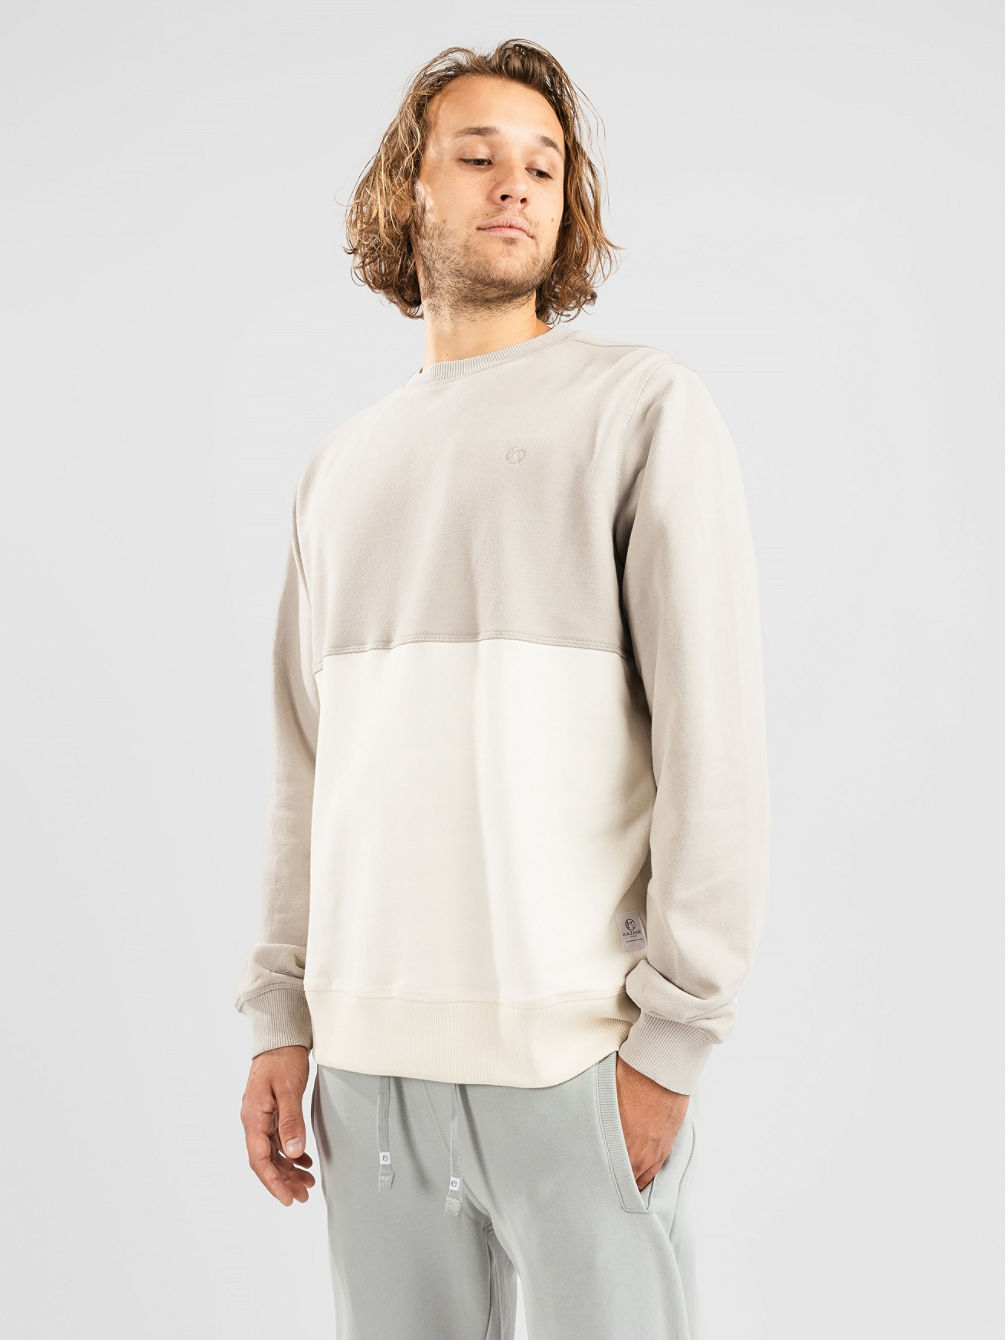 Henrik Naturals Sweater